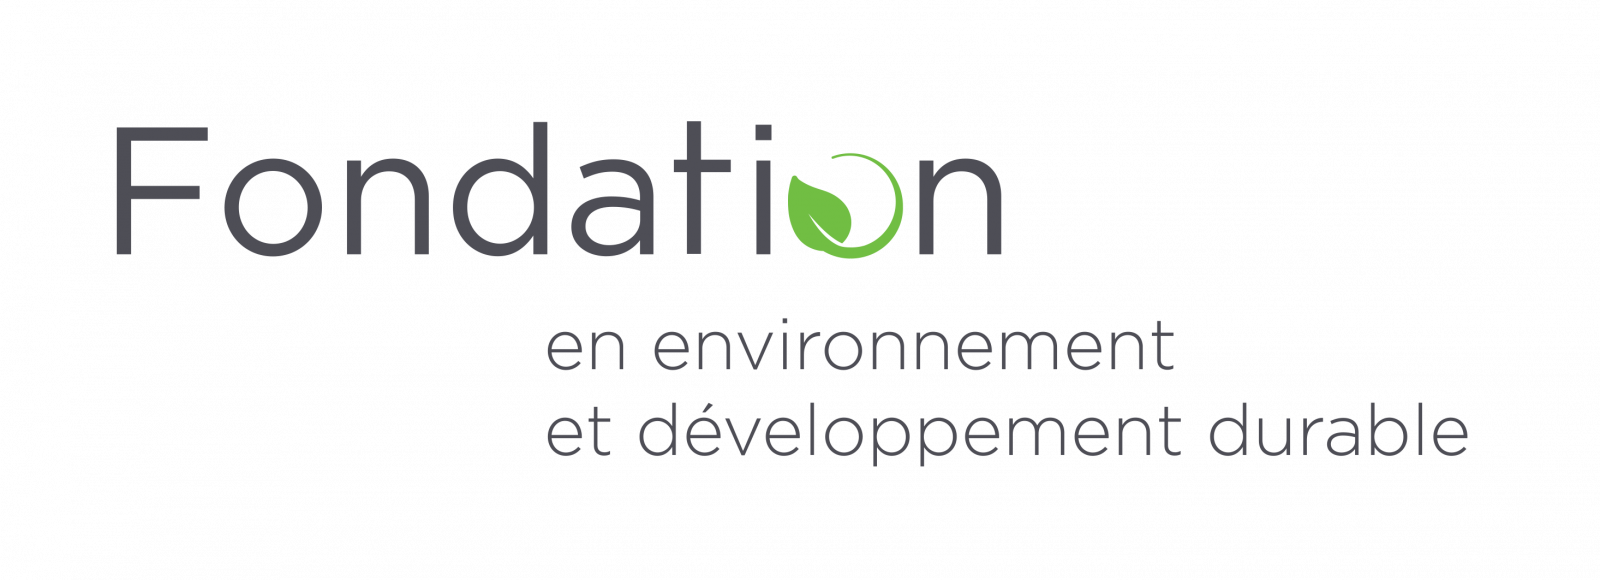 Fondation en environnement logo